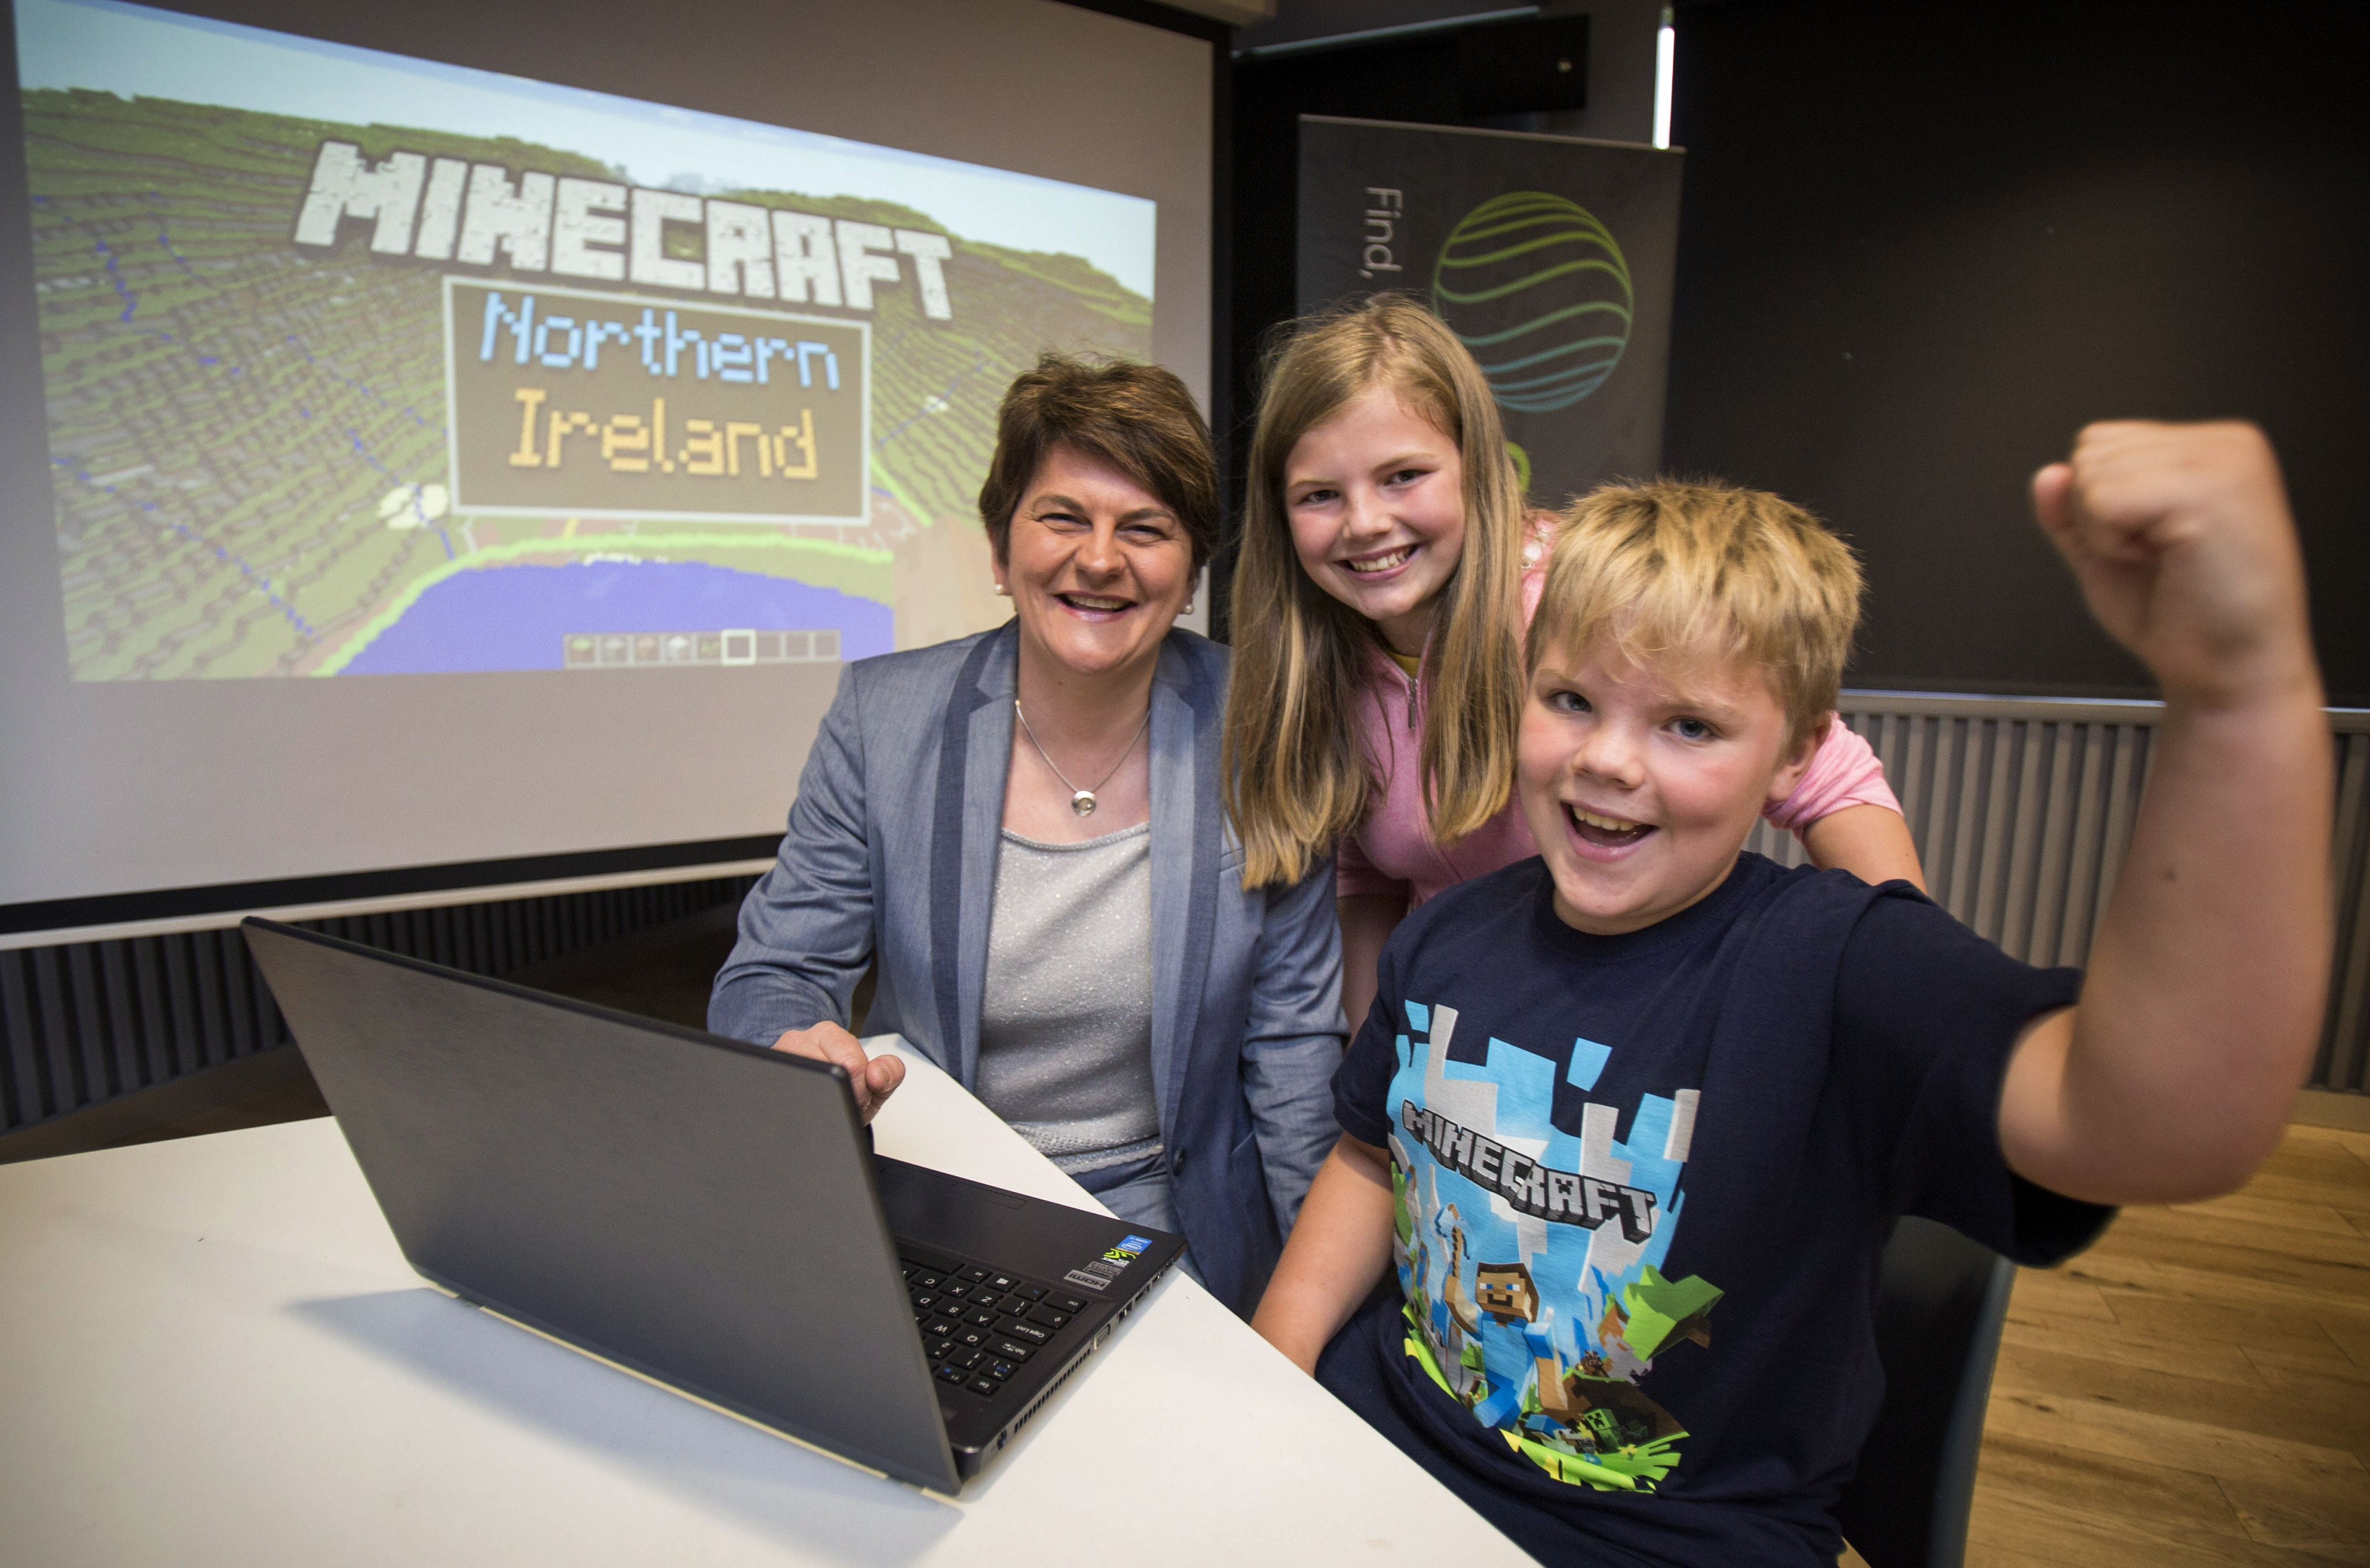 Minecraft free for every Northern Ireland secondary school